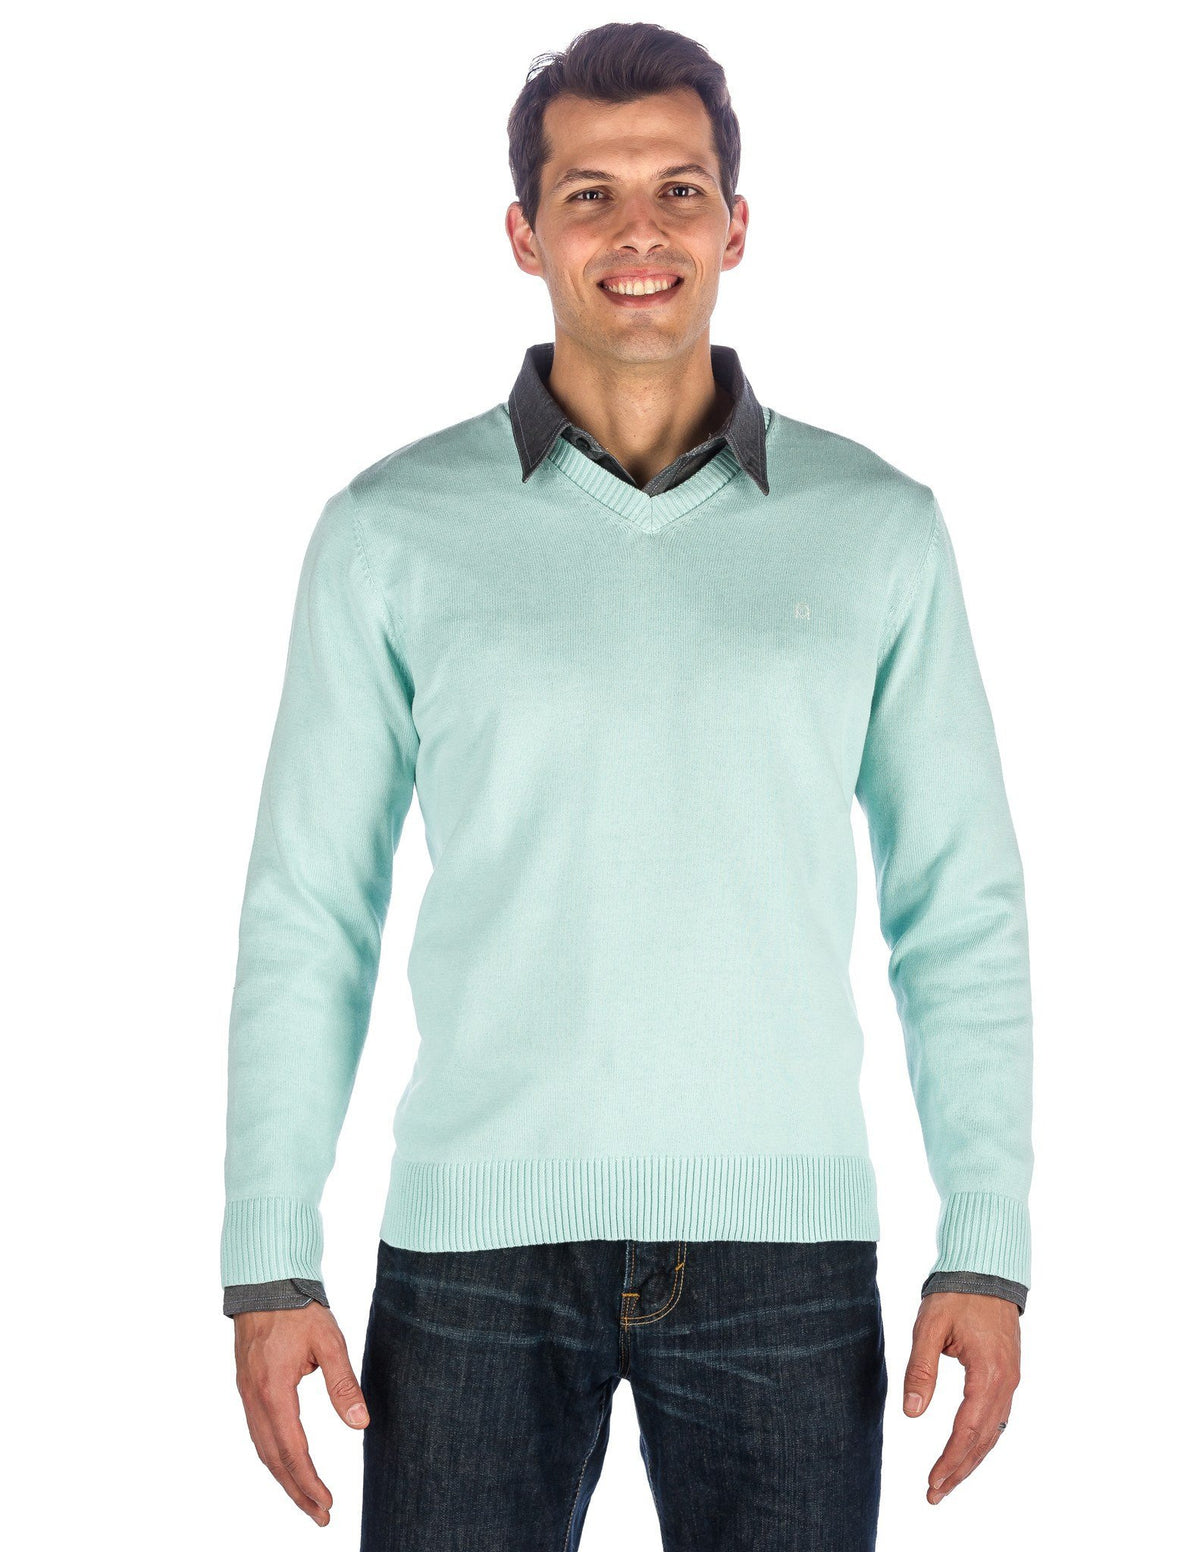 Men's 100% Cotton V-Neck Essential Sweater - Aqua